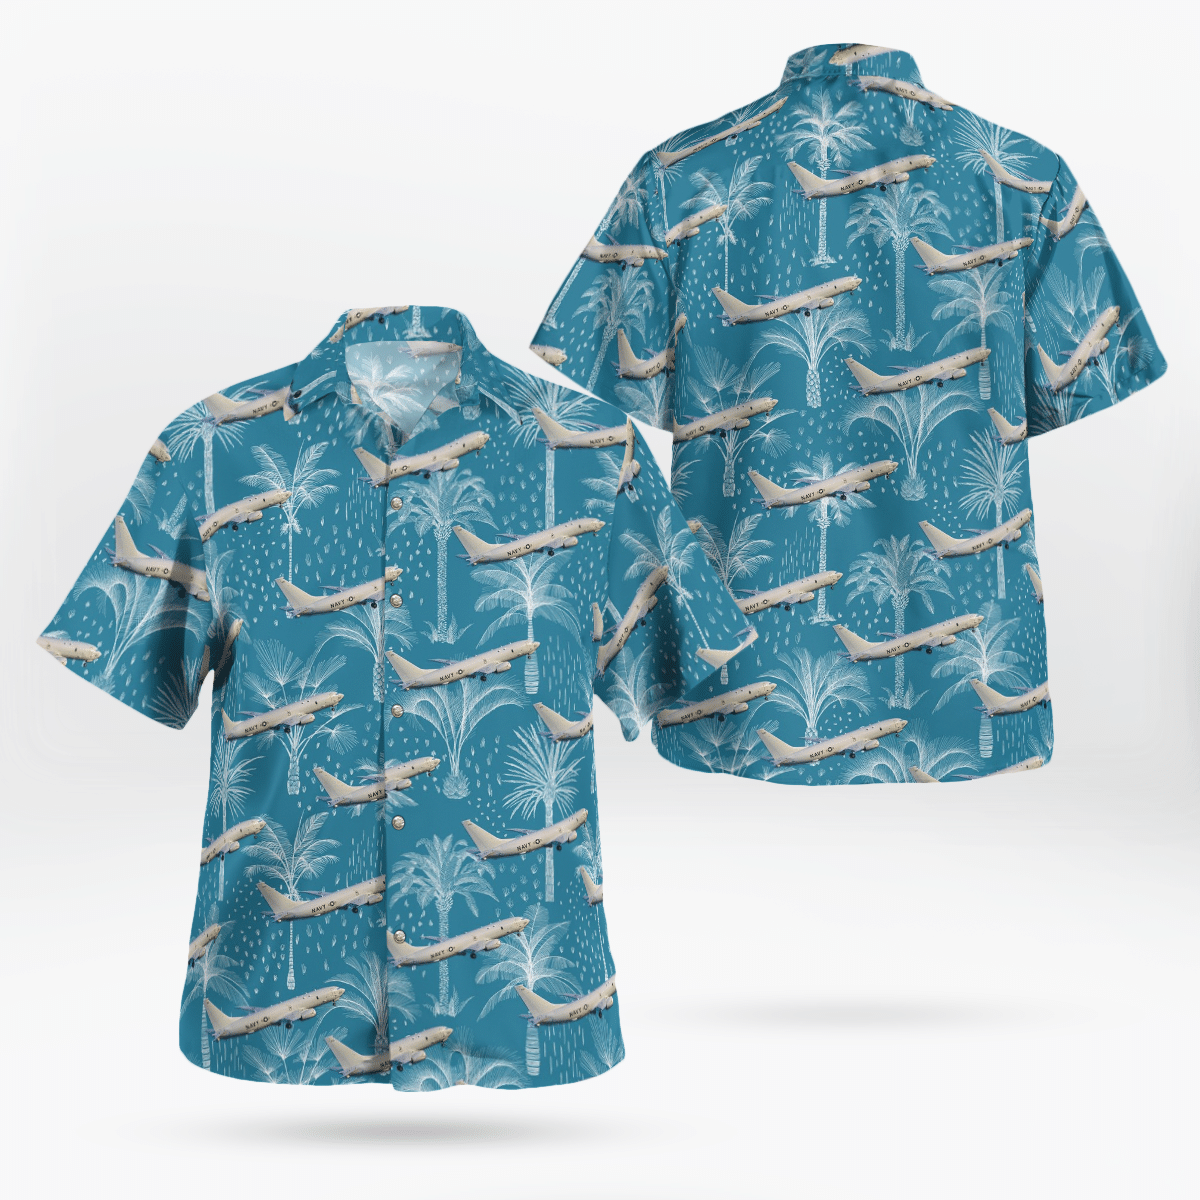 Summer so cool with top new hawaiian shirt below 84